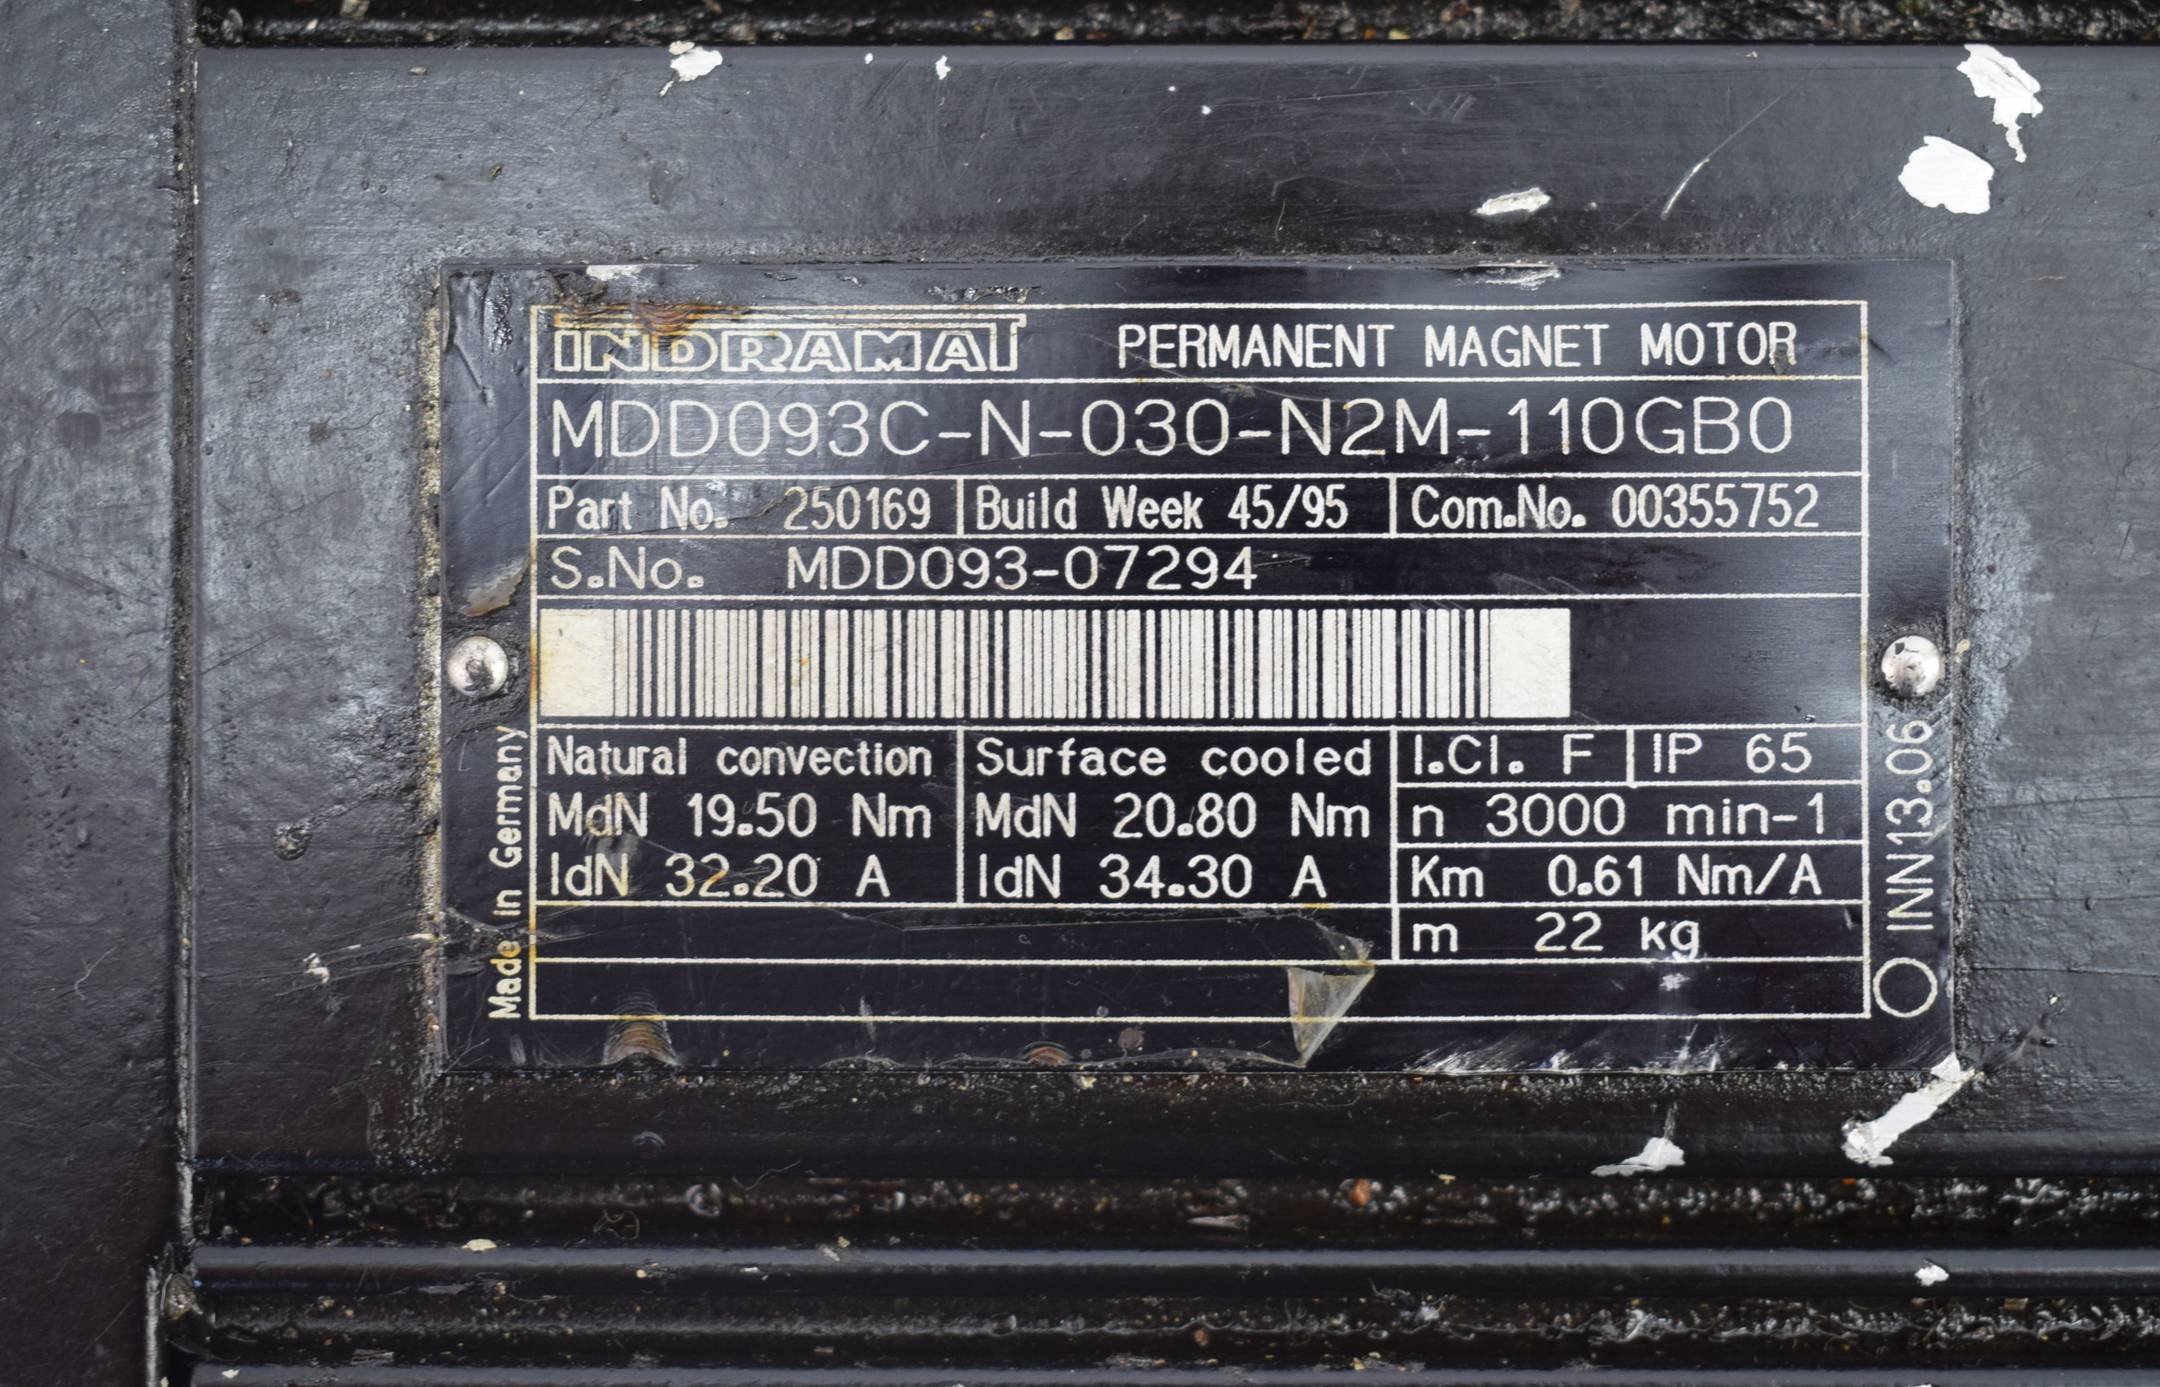 Indramat Permanent Magnet Motor MDD093C-N-030-N2M-110GB0